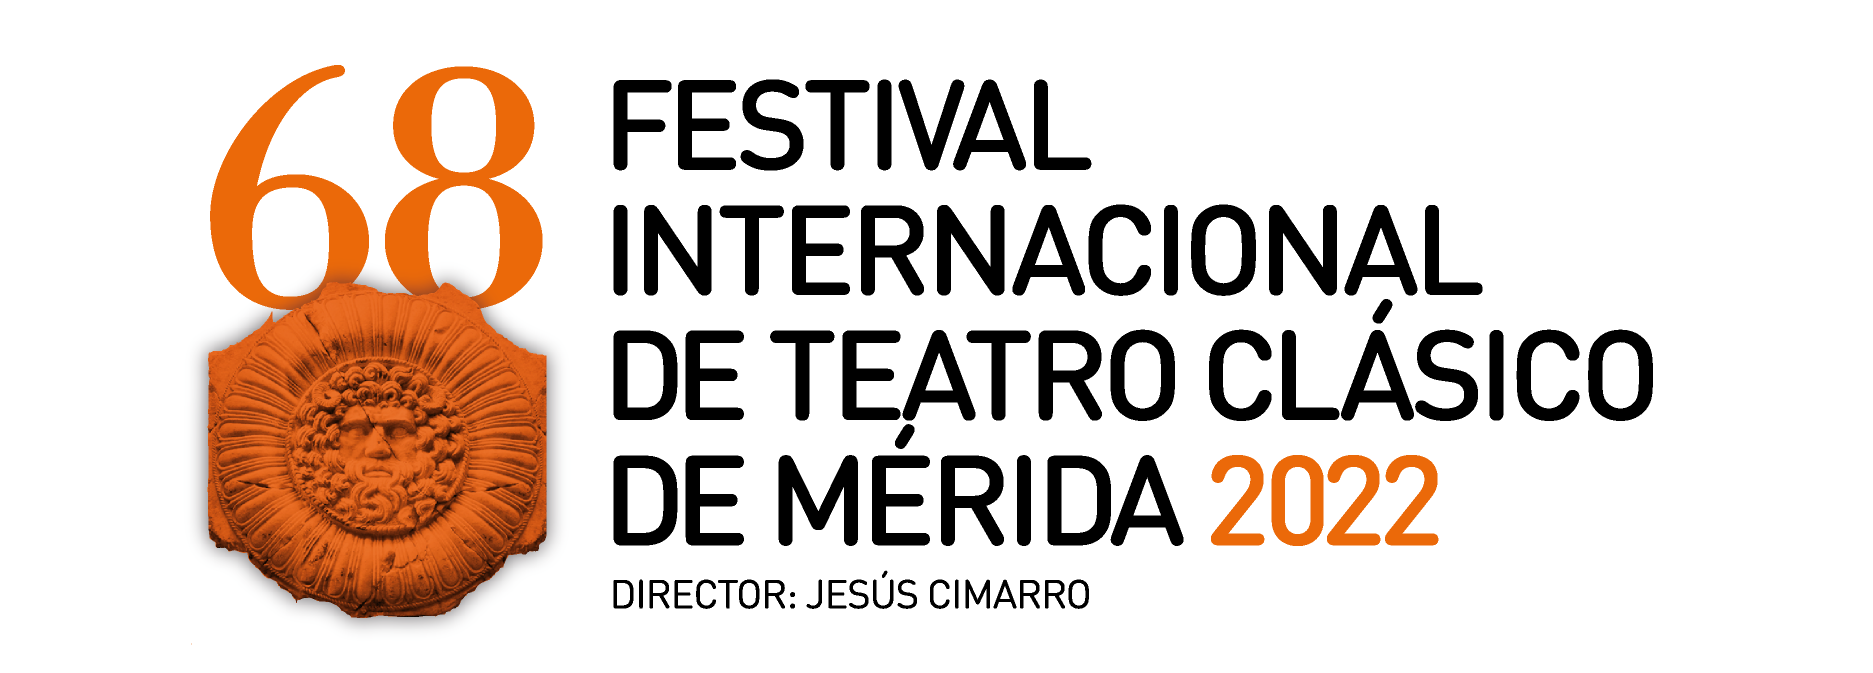 https://www.festivaldemerida.es/